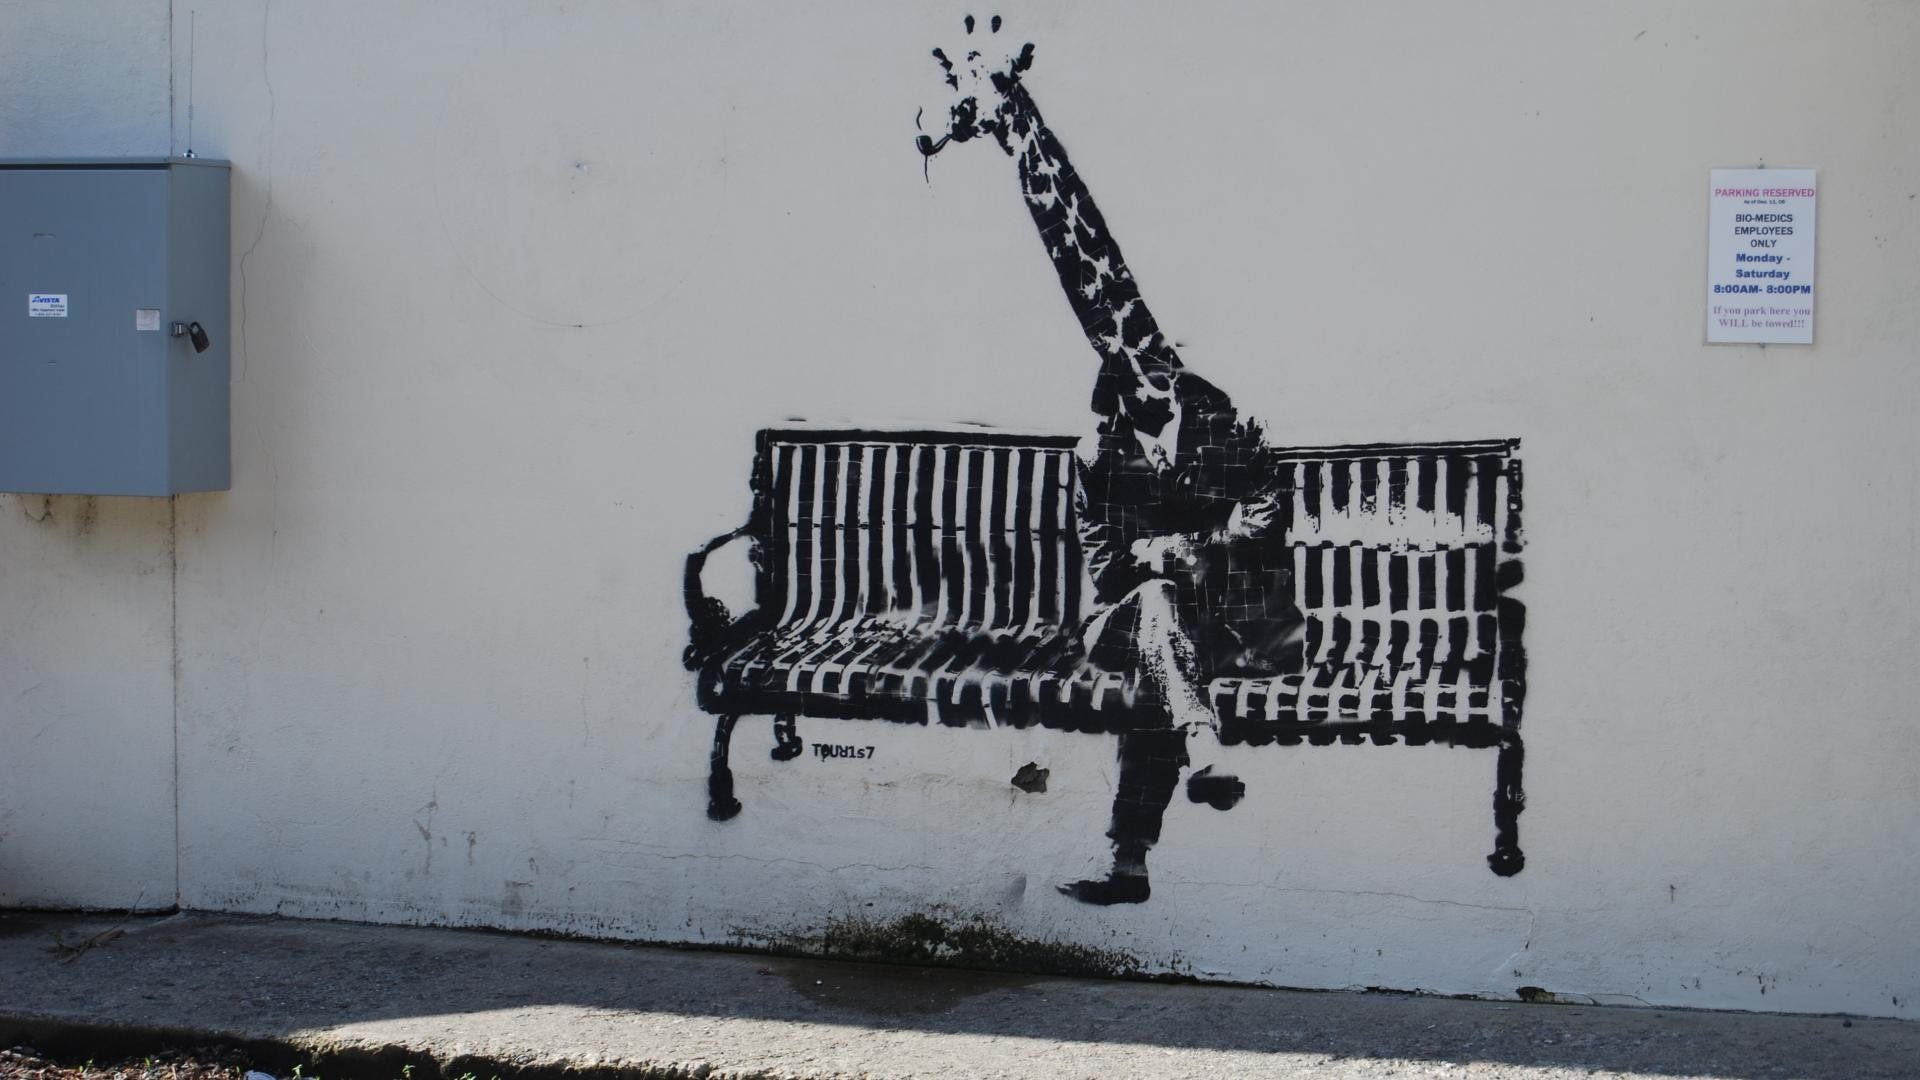 General artwork animals graffiti wall Banksy bench sitting legs giraffes shadow street art